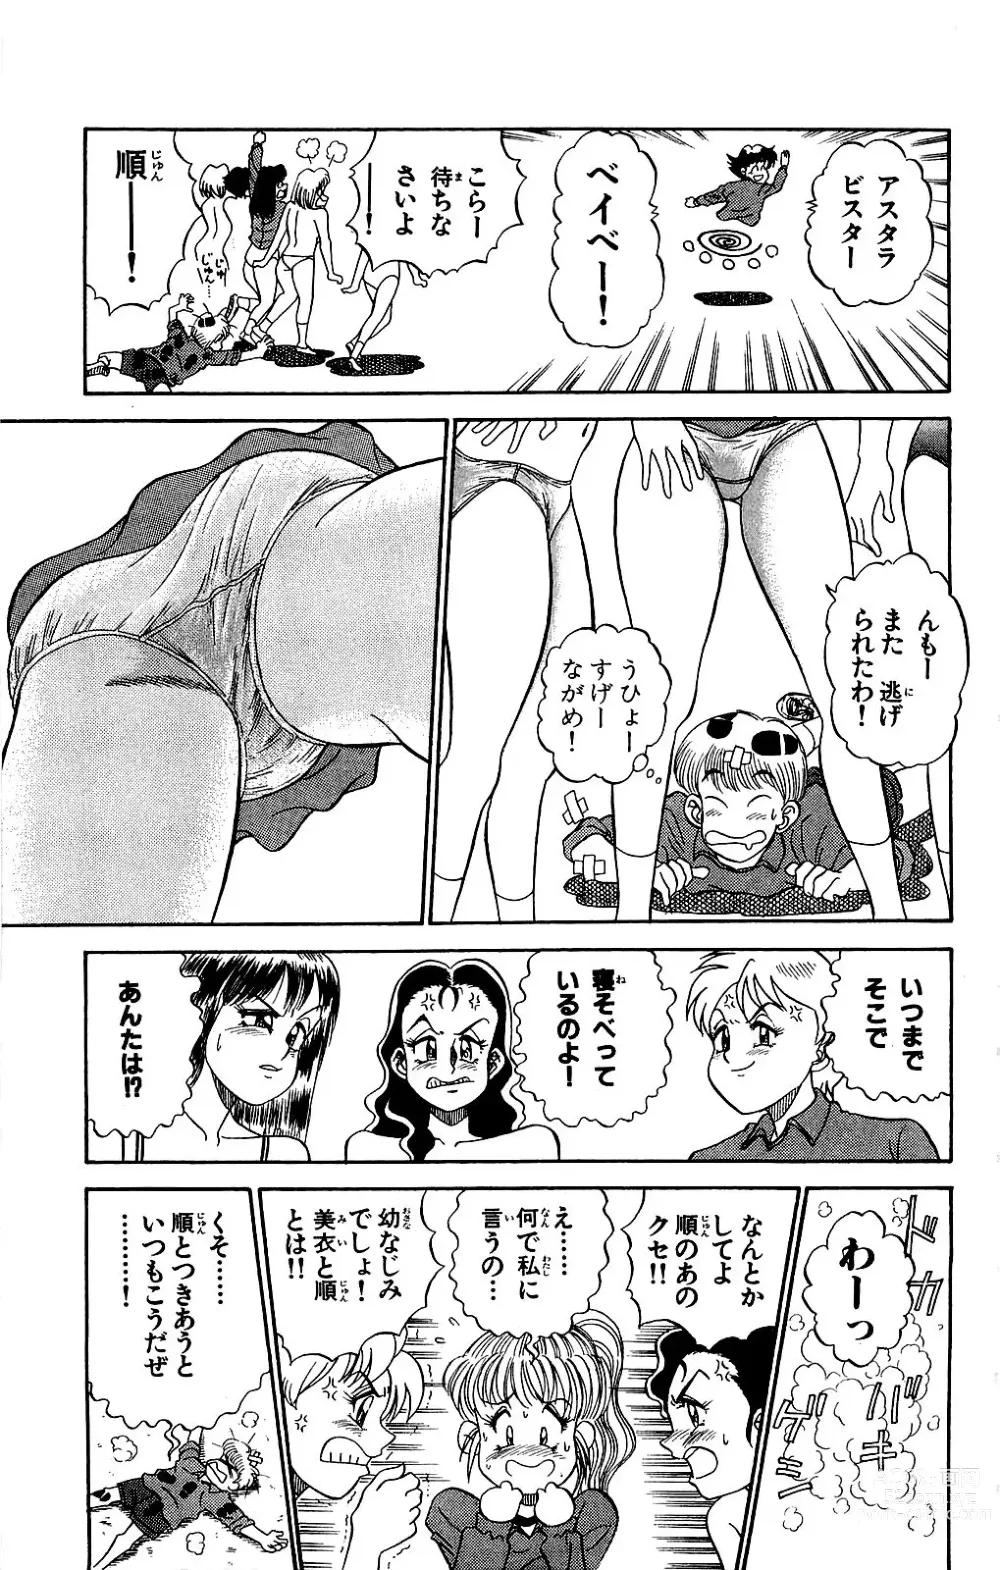 Page 9 of manga Orette Piyoritan Vol. 1